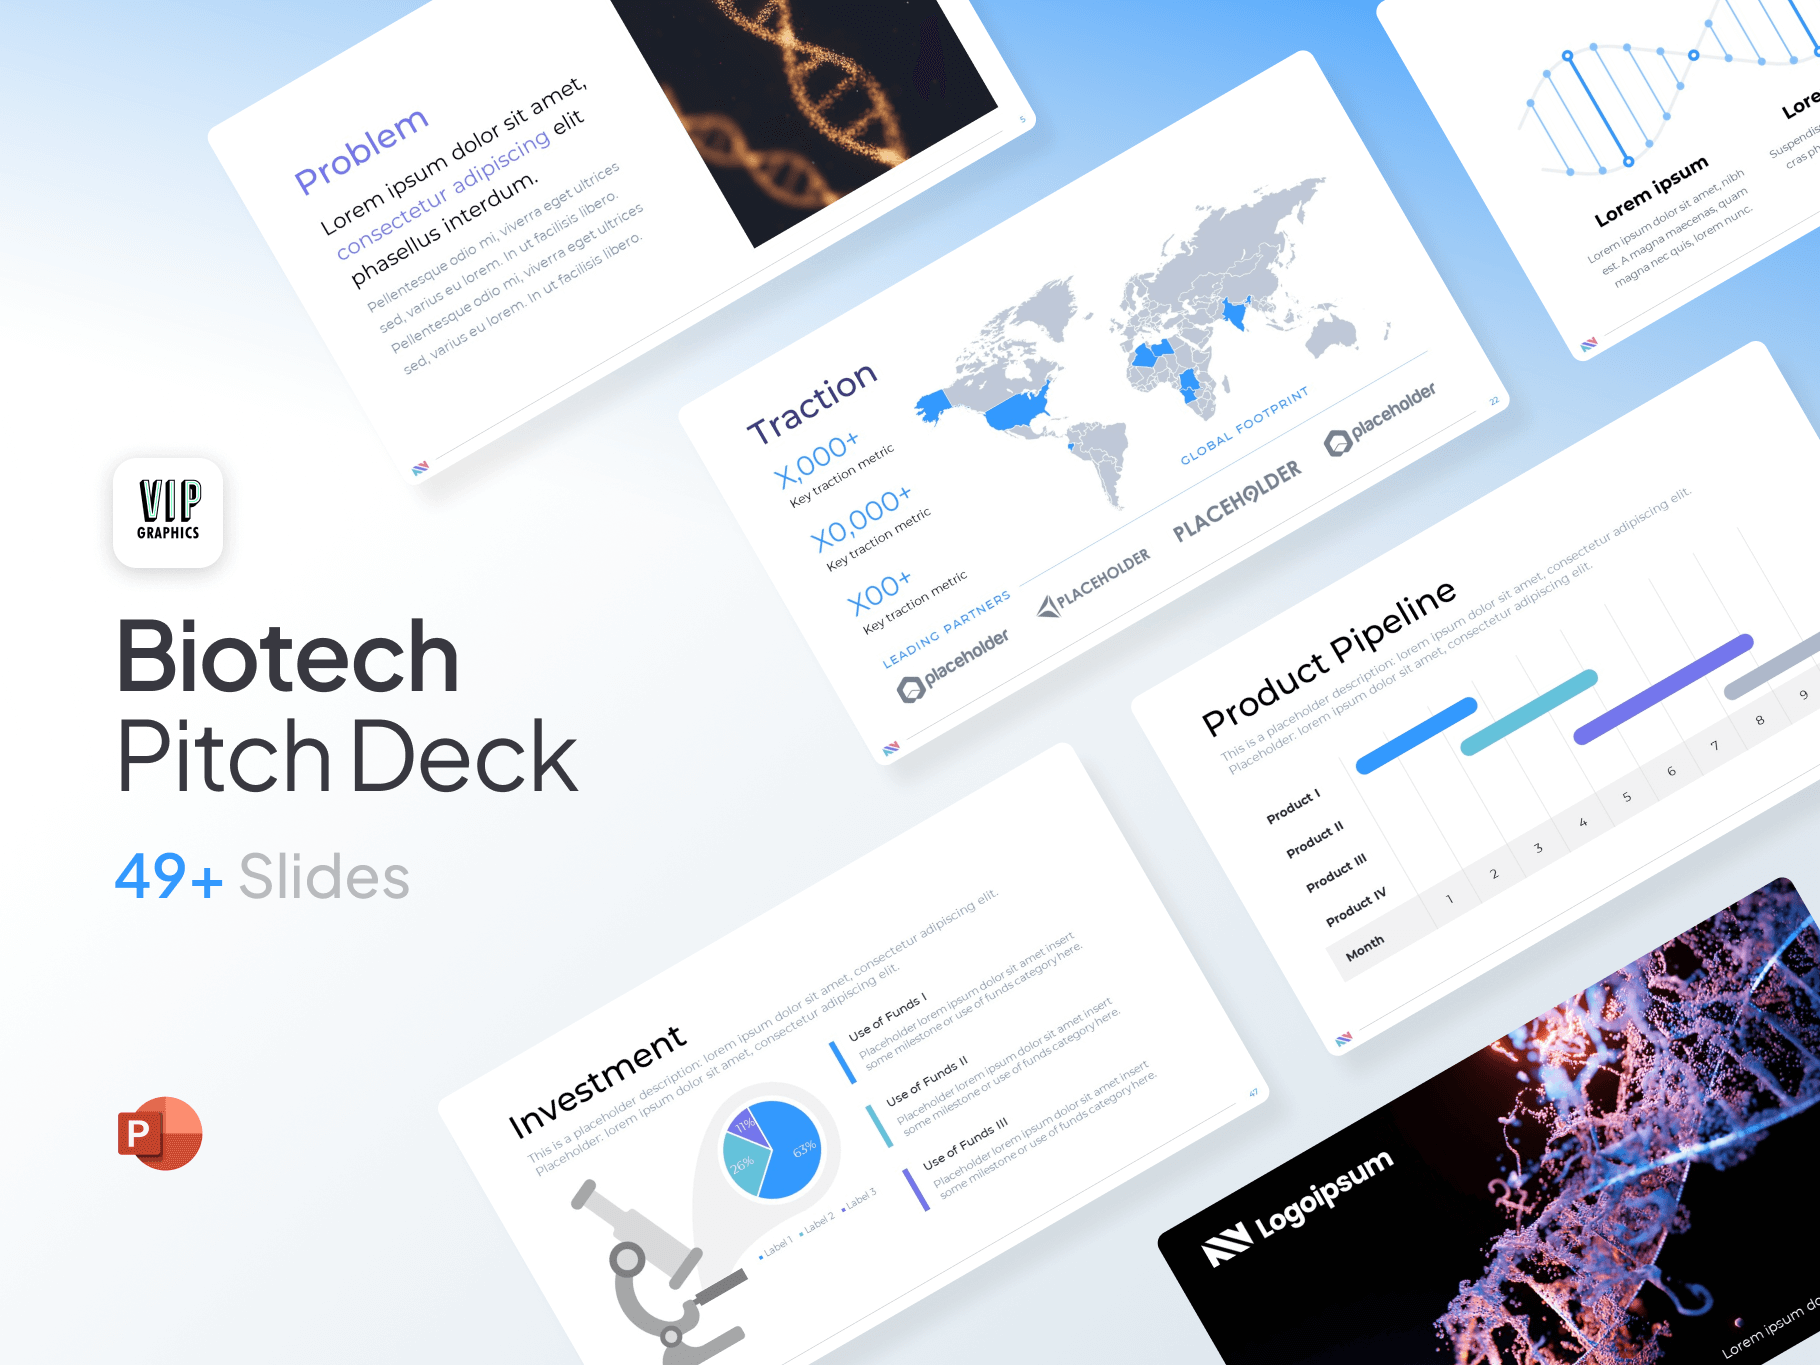 Biotech Pitch Deck Template - Investor Presentation for biotech startups | VIP Graphics